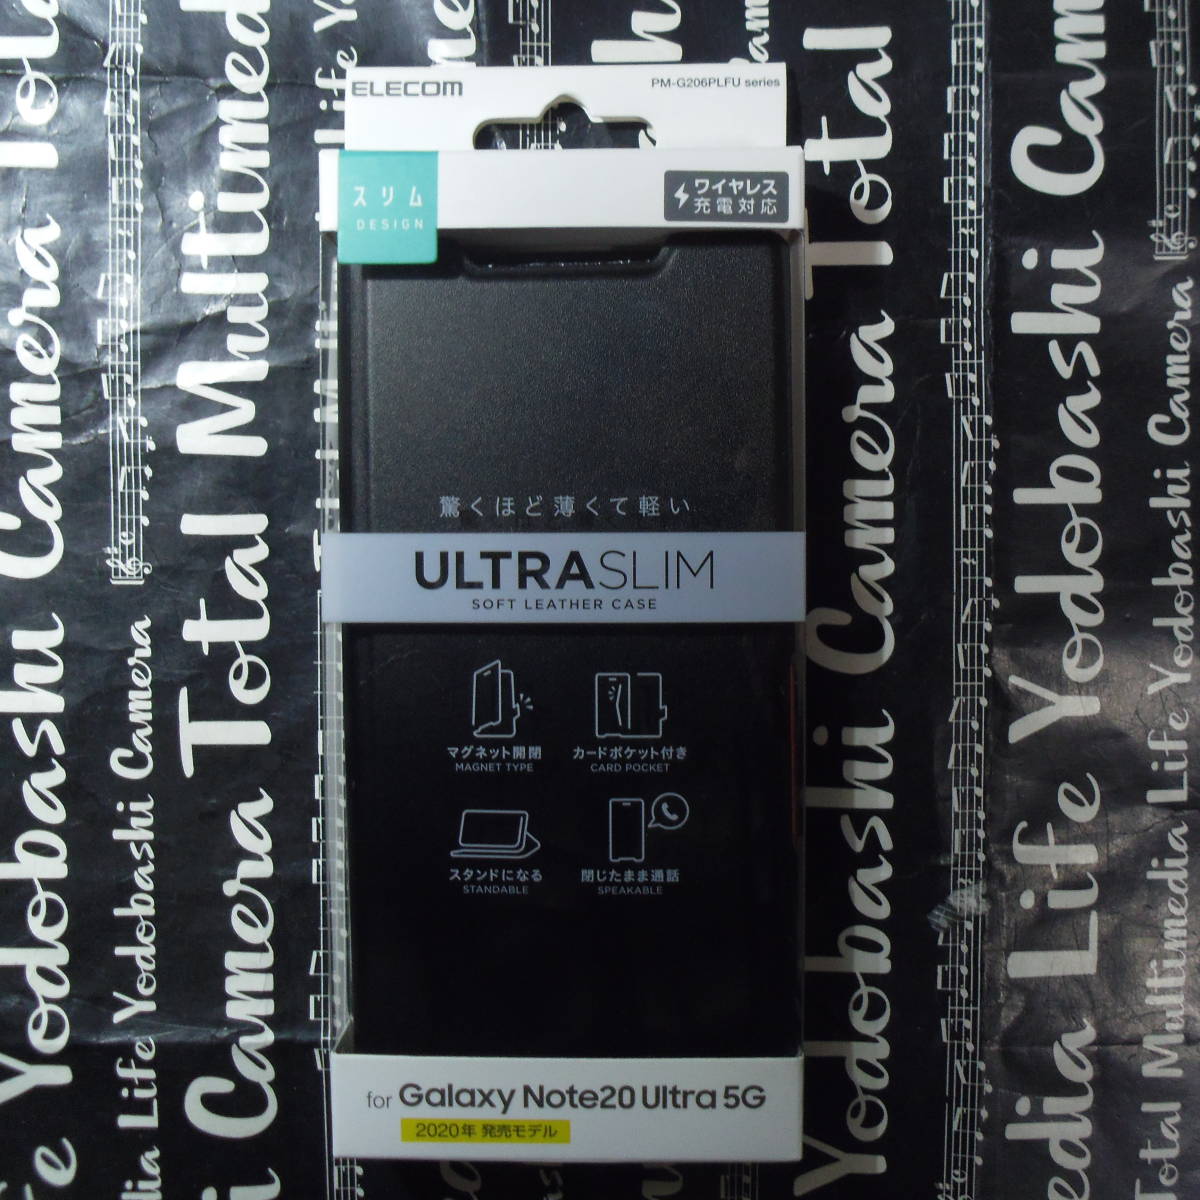 Galaxy Note20 Ultra 5G ソフトレザーケース 薄型超軽量なウルトラスリムタイプ 磁石付 ブラック ポリカーボネート カードポケット付ELECOM_画像1